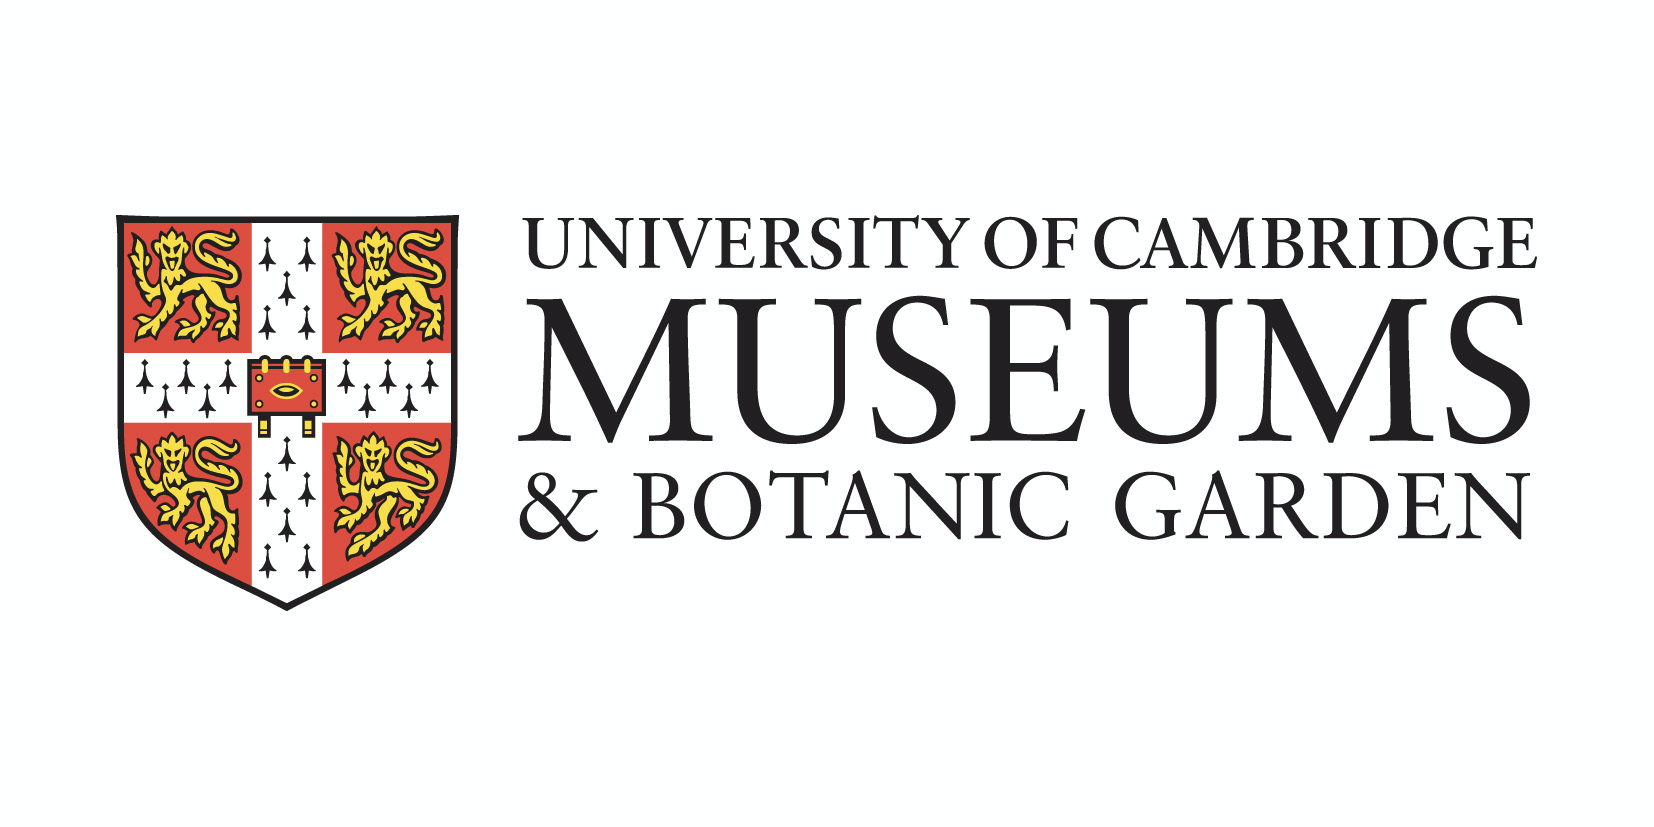 The University of Cambridge Museums and Botanic Garden logo.